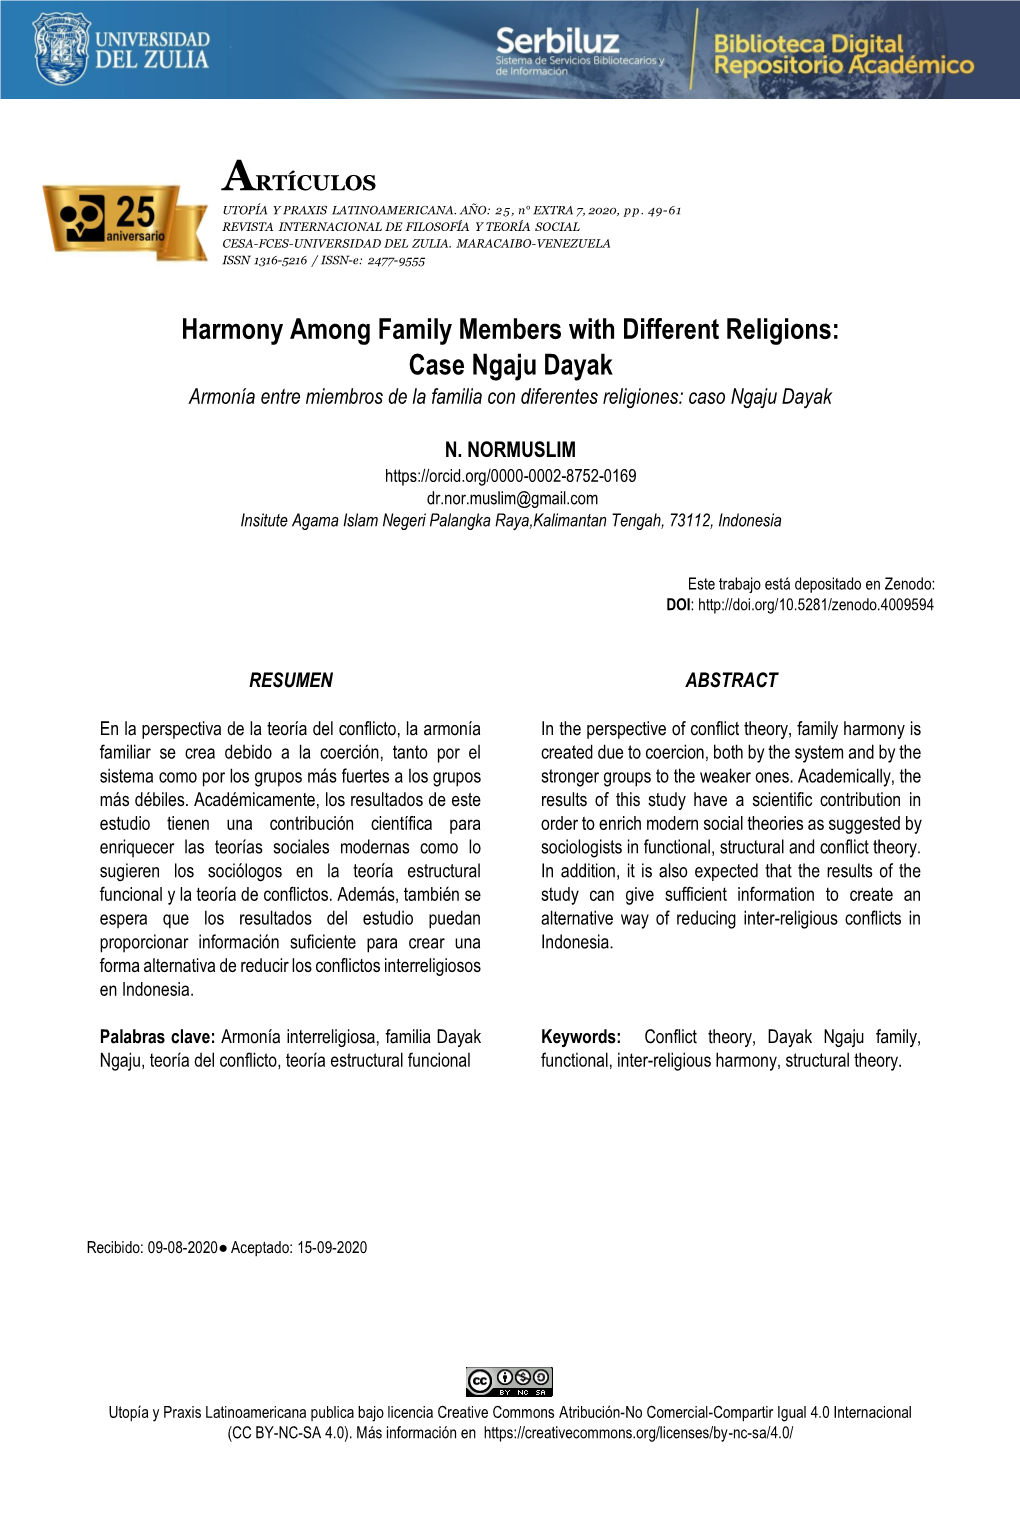 Harmony Among Family Members with Different Religions: Case Ngaju Dayak Armonía Entre Miembros De La Familia Con Diferentes Religiones: Caso Ngaju Dayak